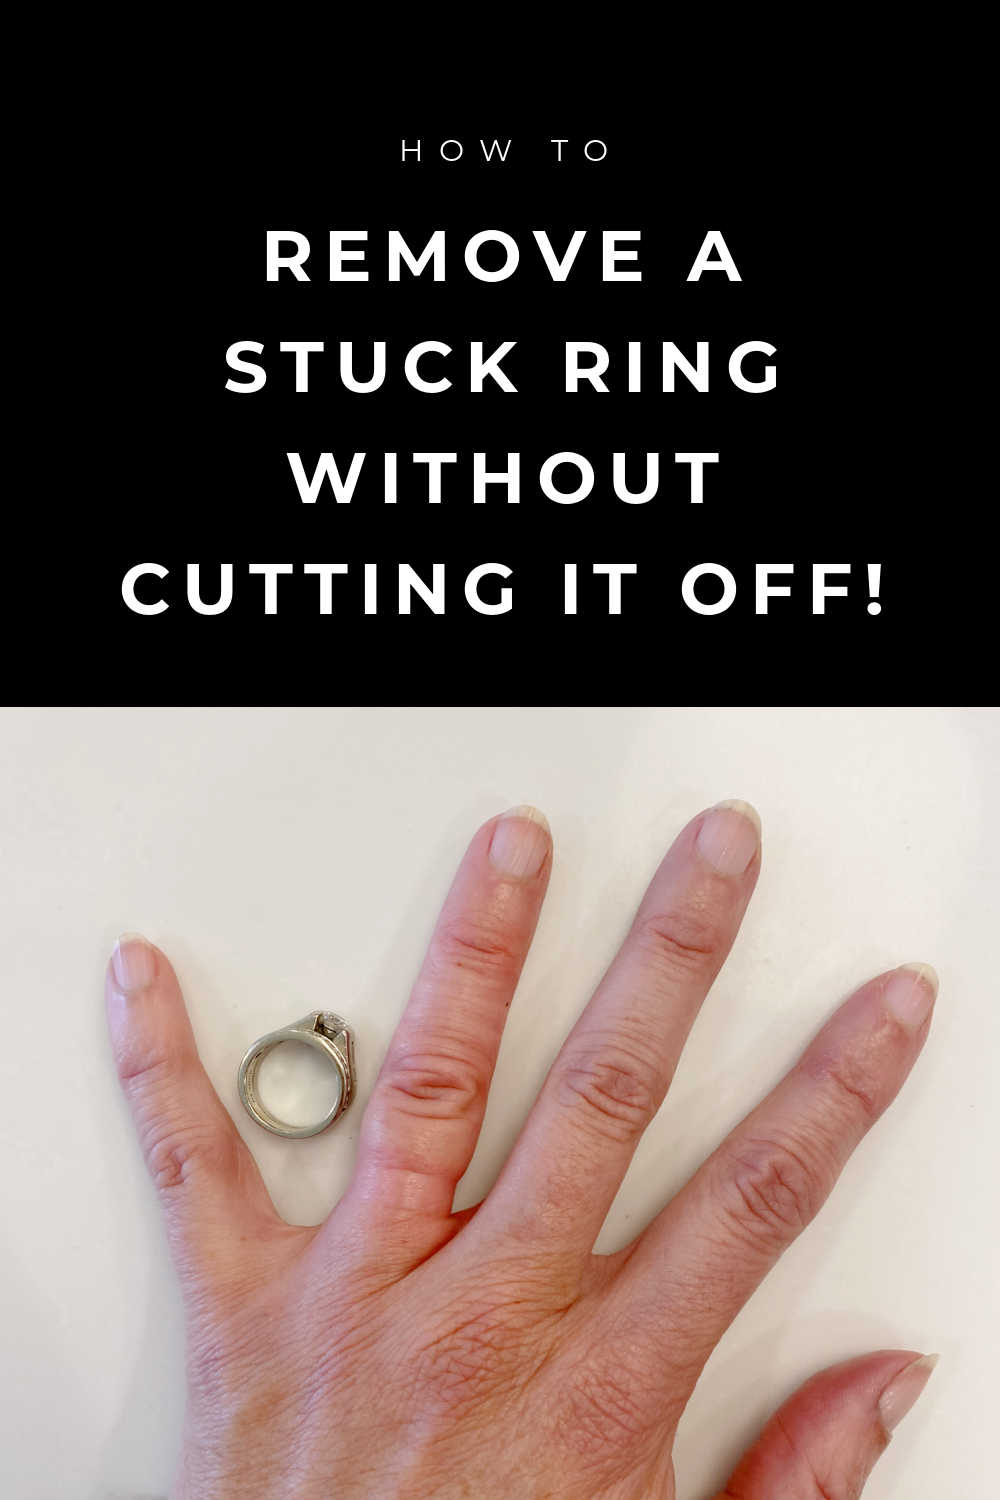 My Ring Got Stuck on My Finger | TikTok